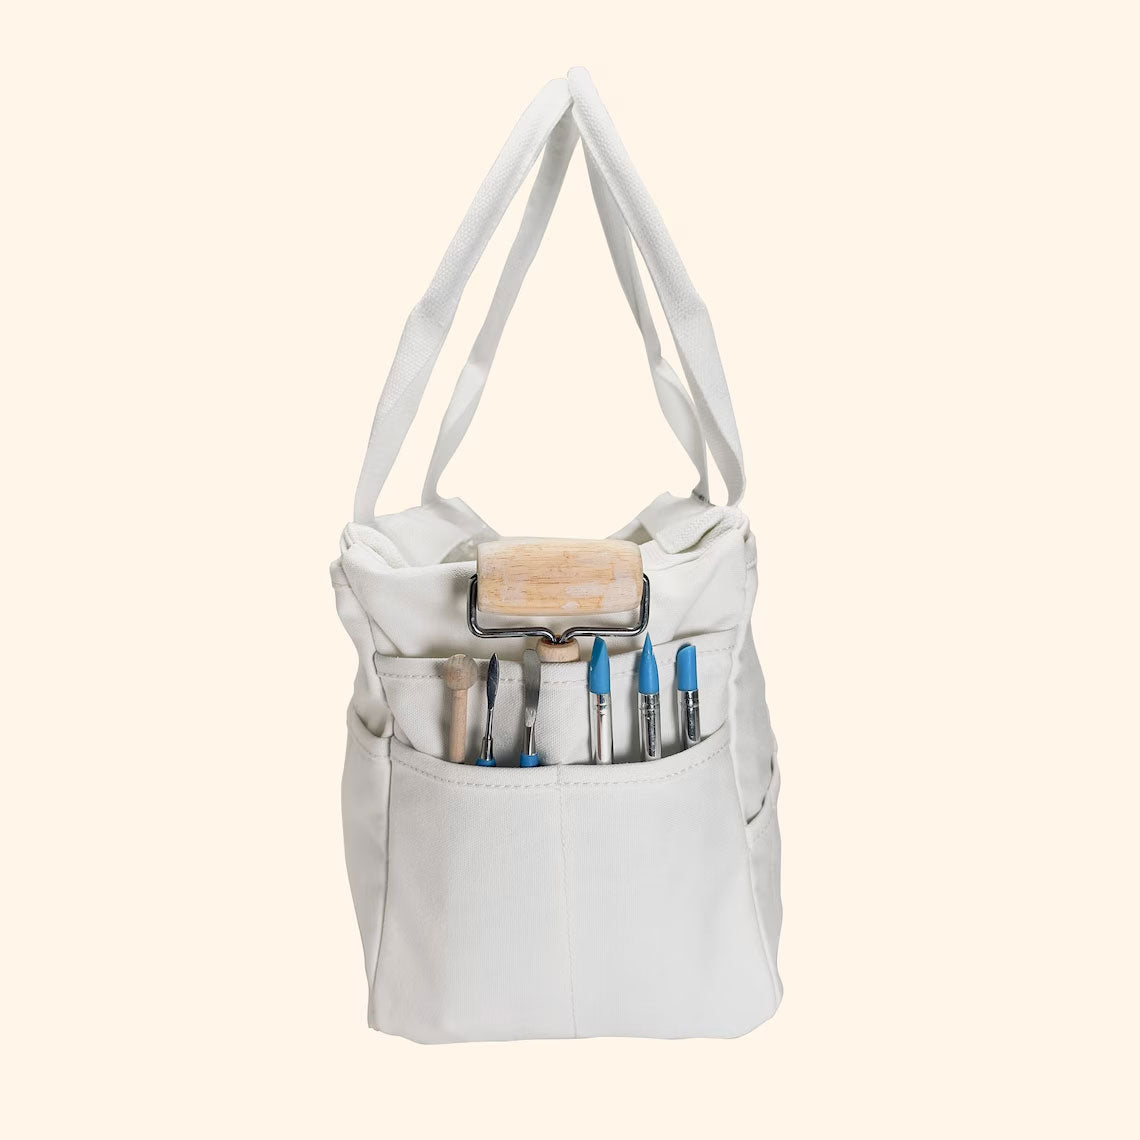 Soolla Studio Art Supply Bag - Blue Skies